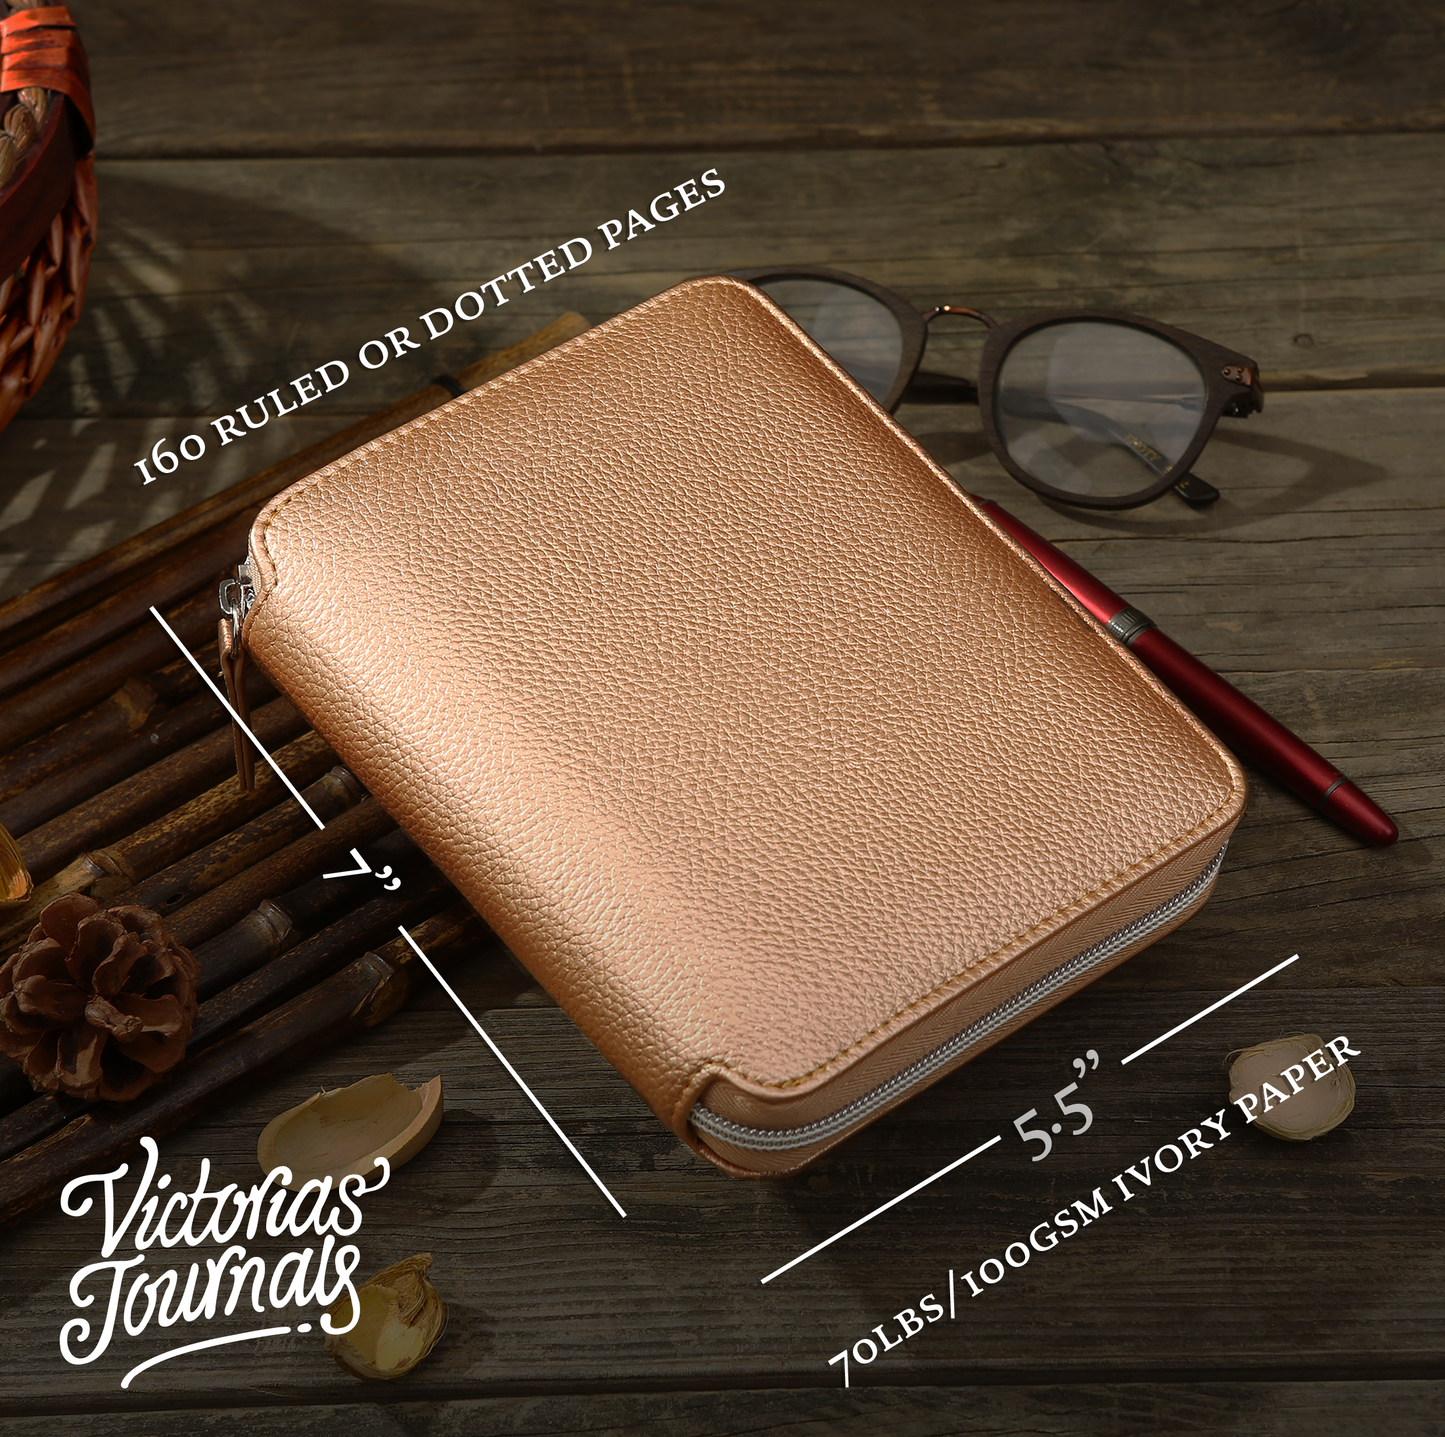 Zippered Vegan Leather Portfolio Notebook / Diary (Light Copper)